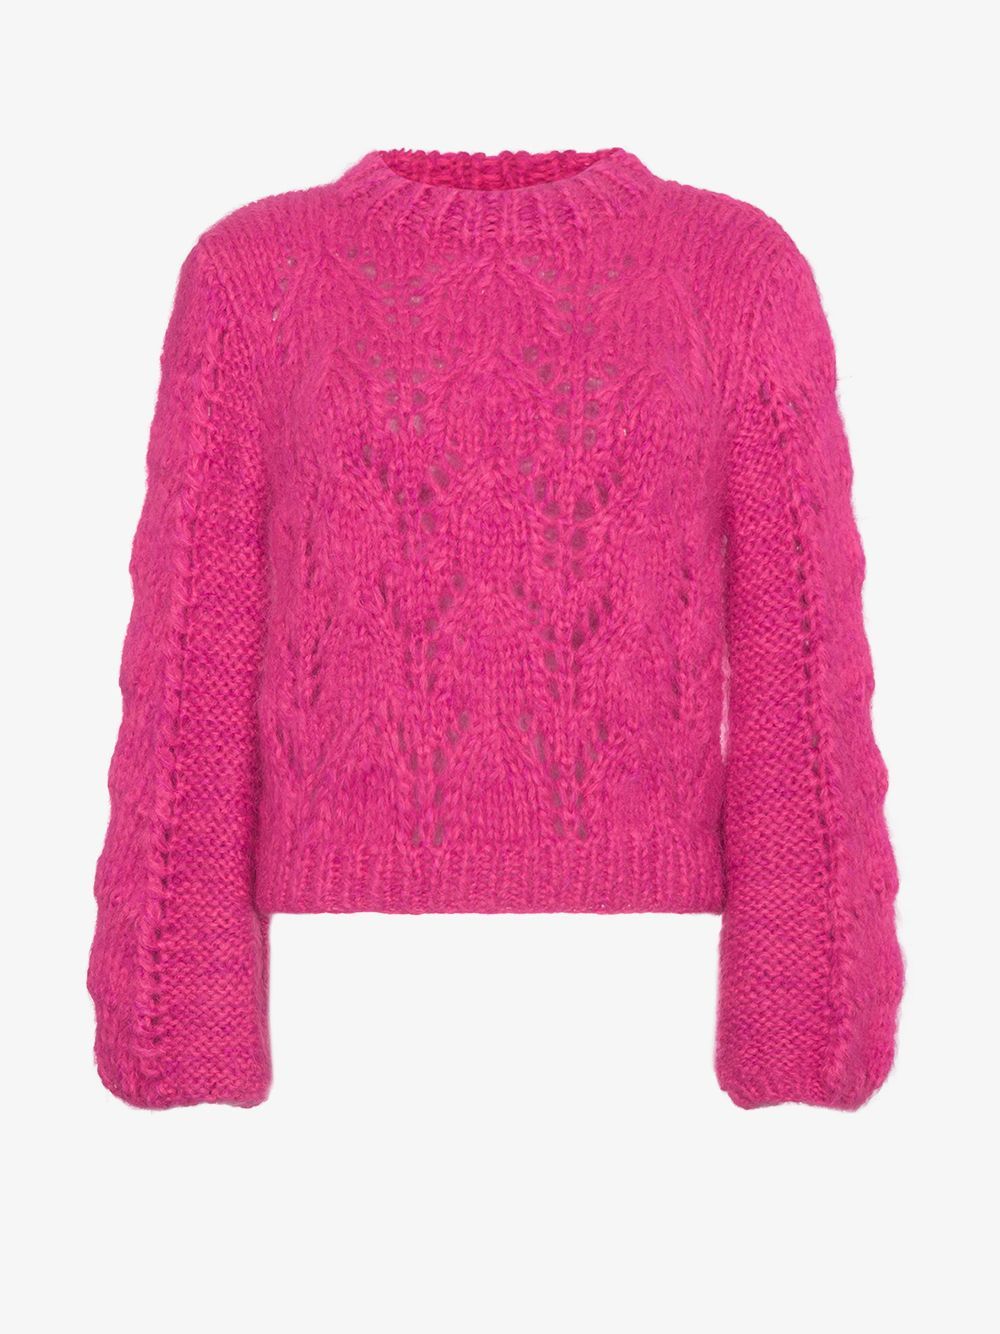 Ganni pink Julliard knitted jumper | Browns Fashion